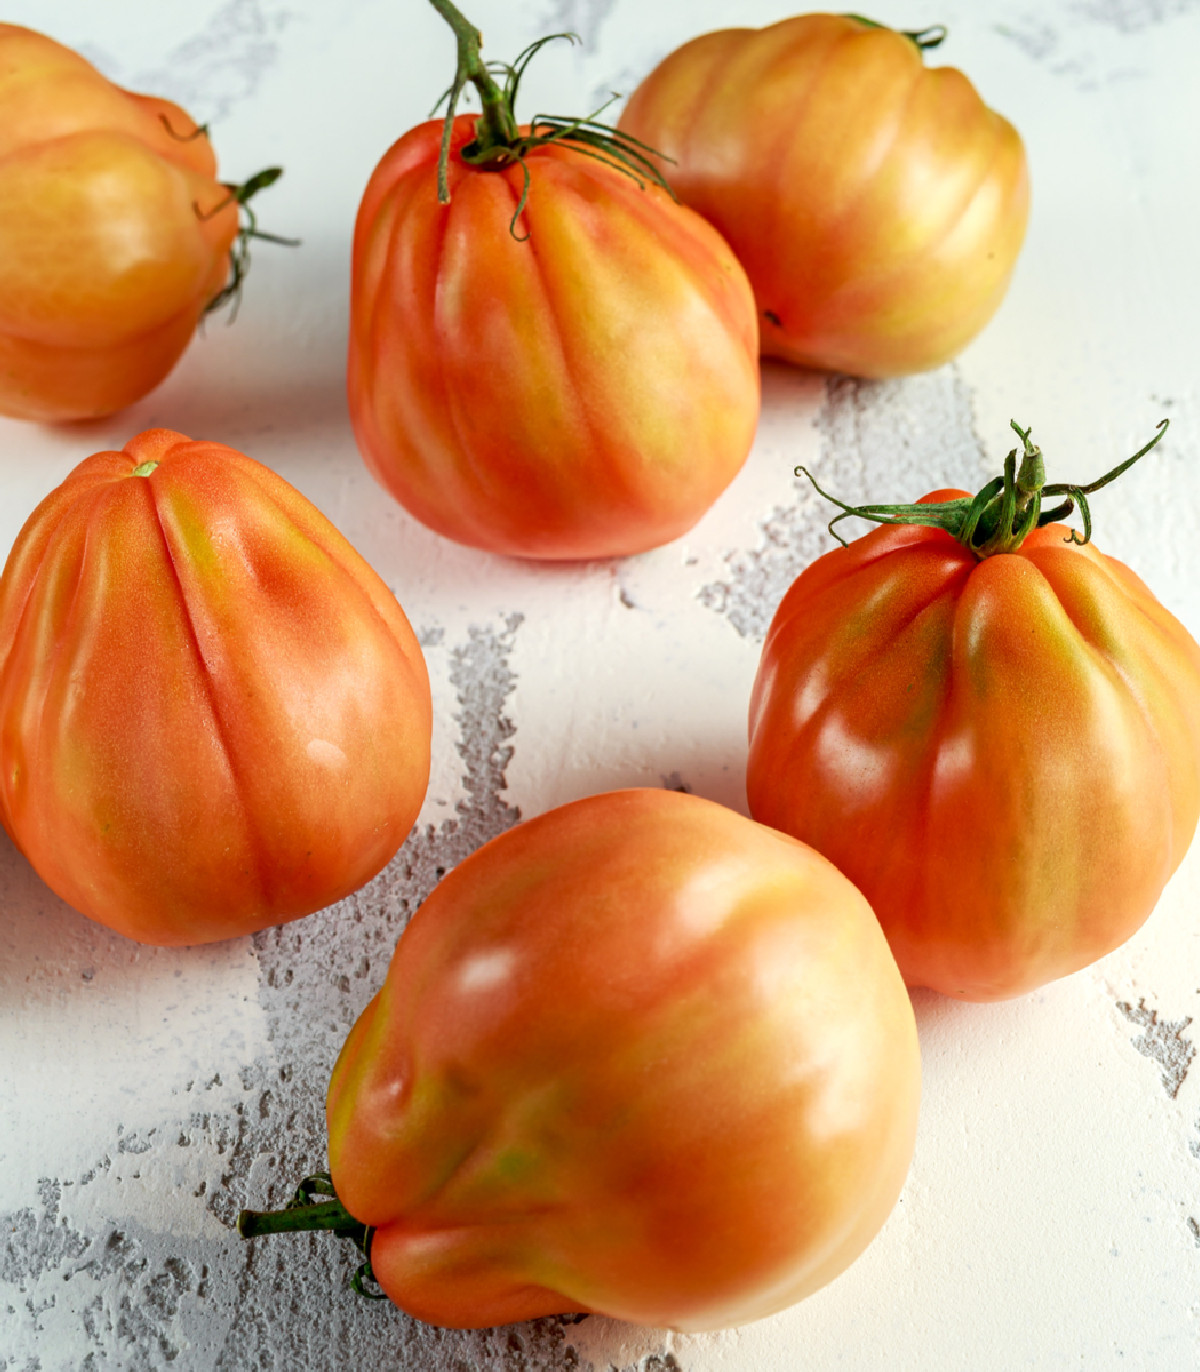 BIO Rajče Coure di Bue oranžové - Solanum lycopersicum - bio osivo rajčat - 8 ks